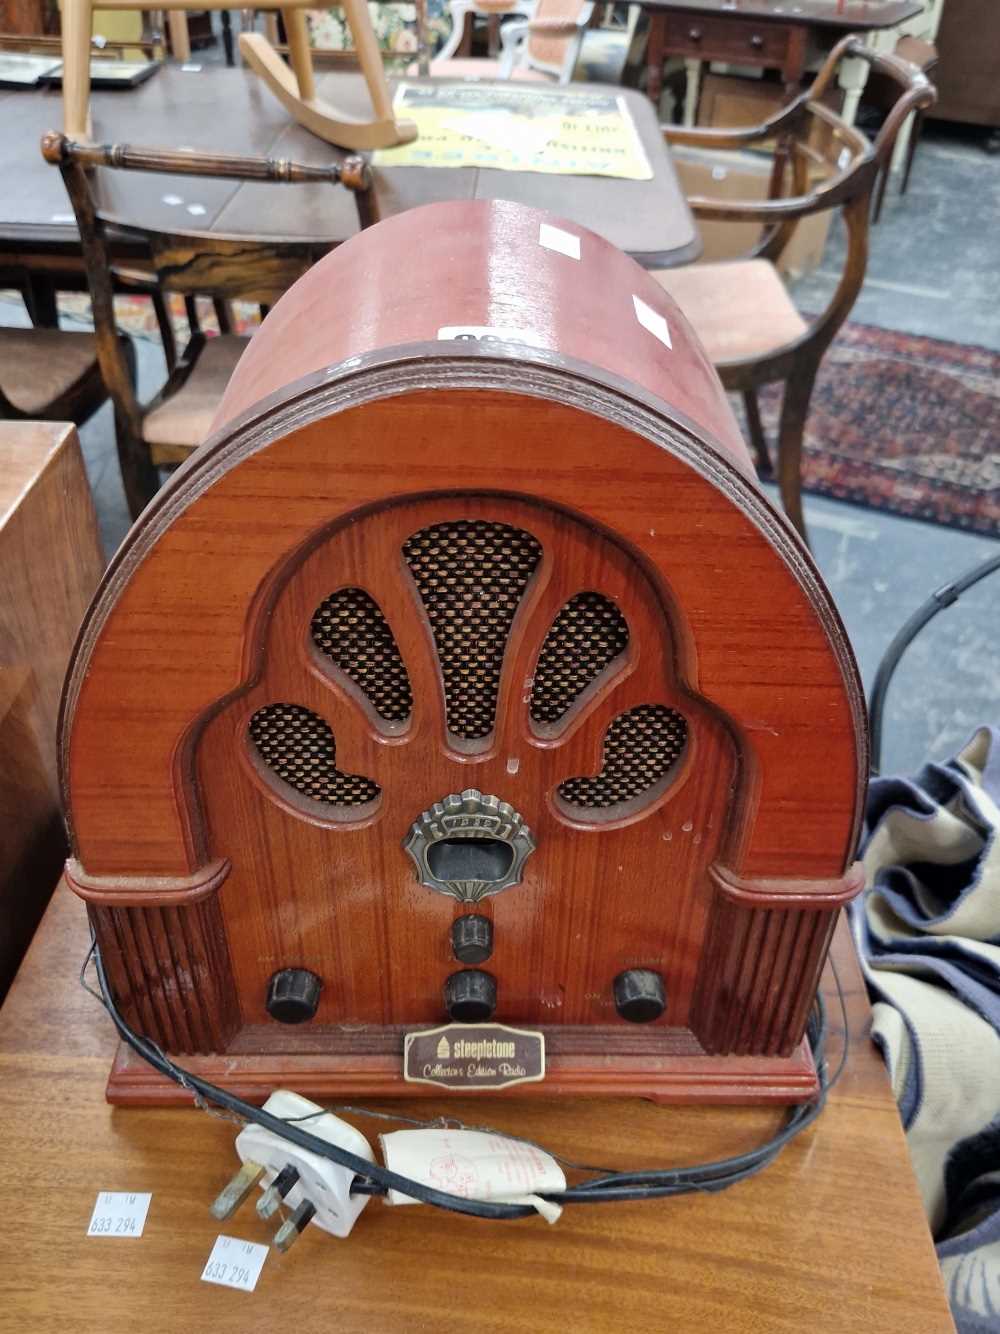 A retro style radio.